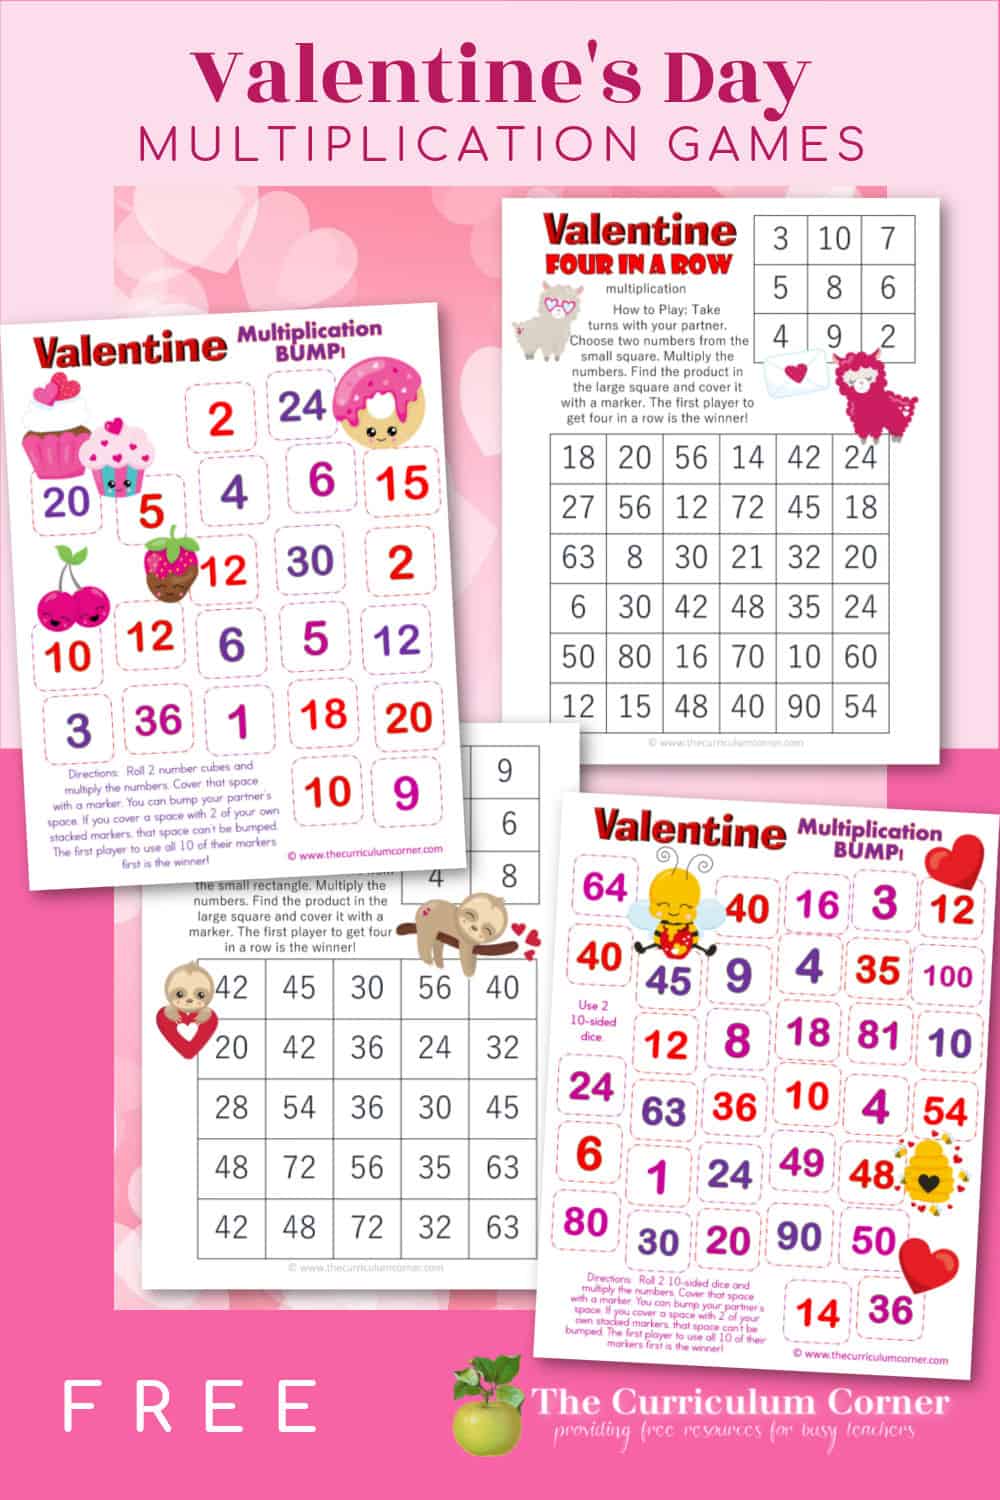 valentine-s-day-multiplication-games-the-curriculum-corner-4-5-6